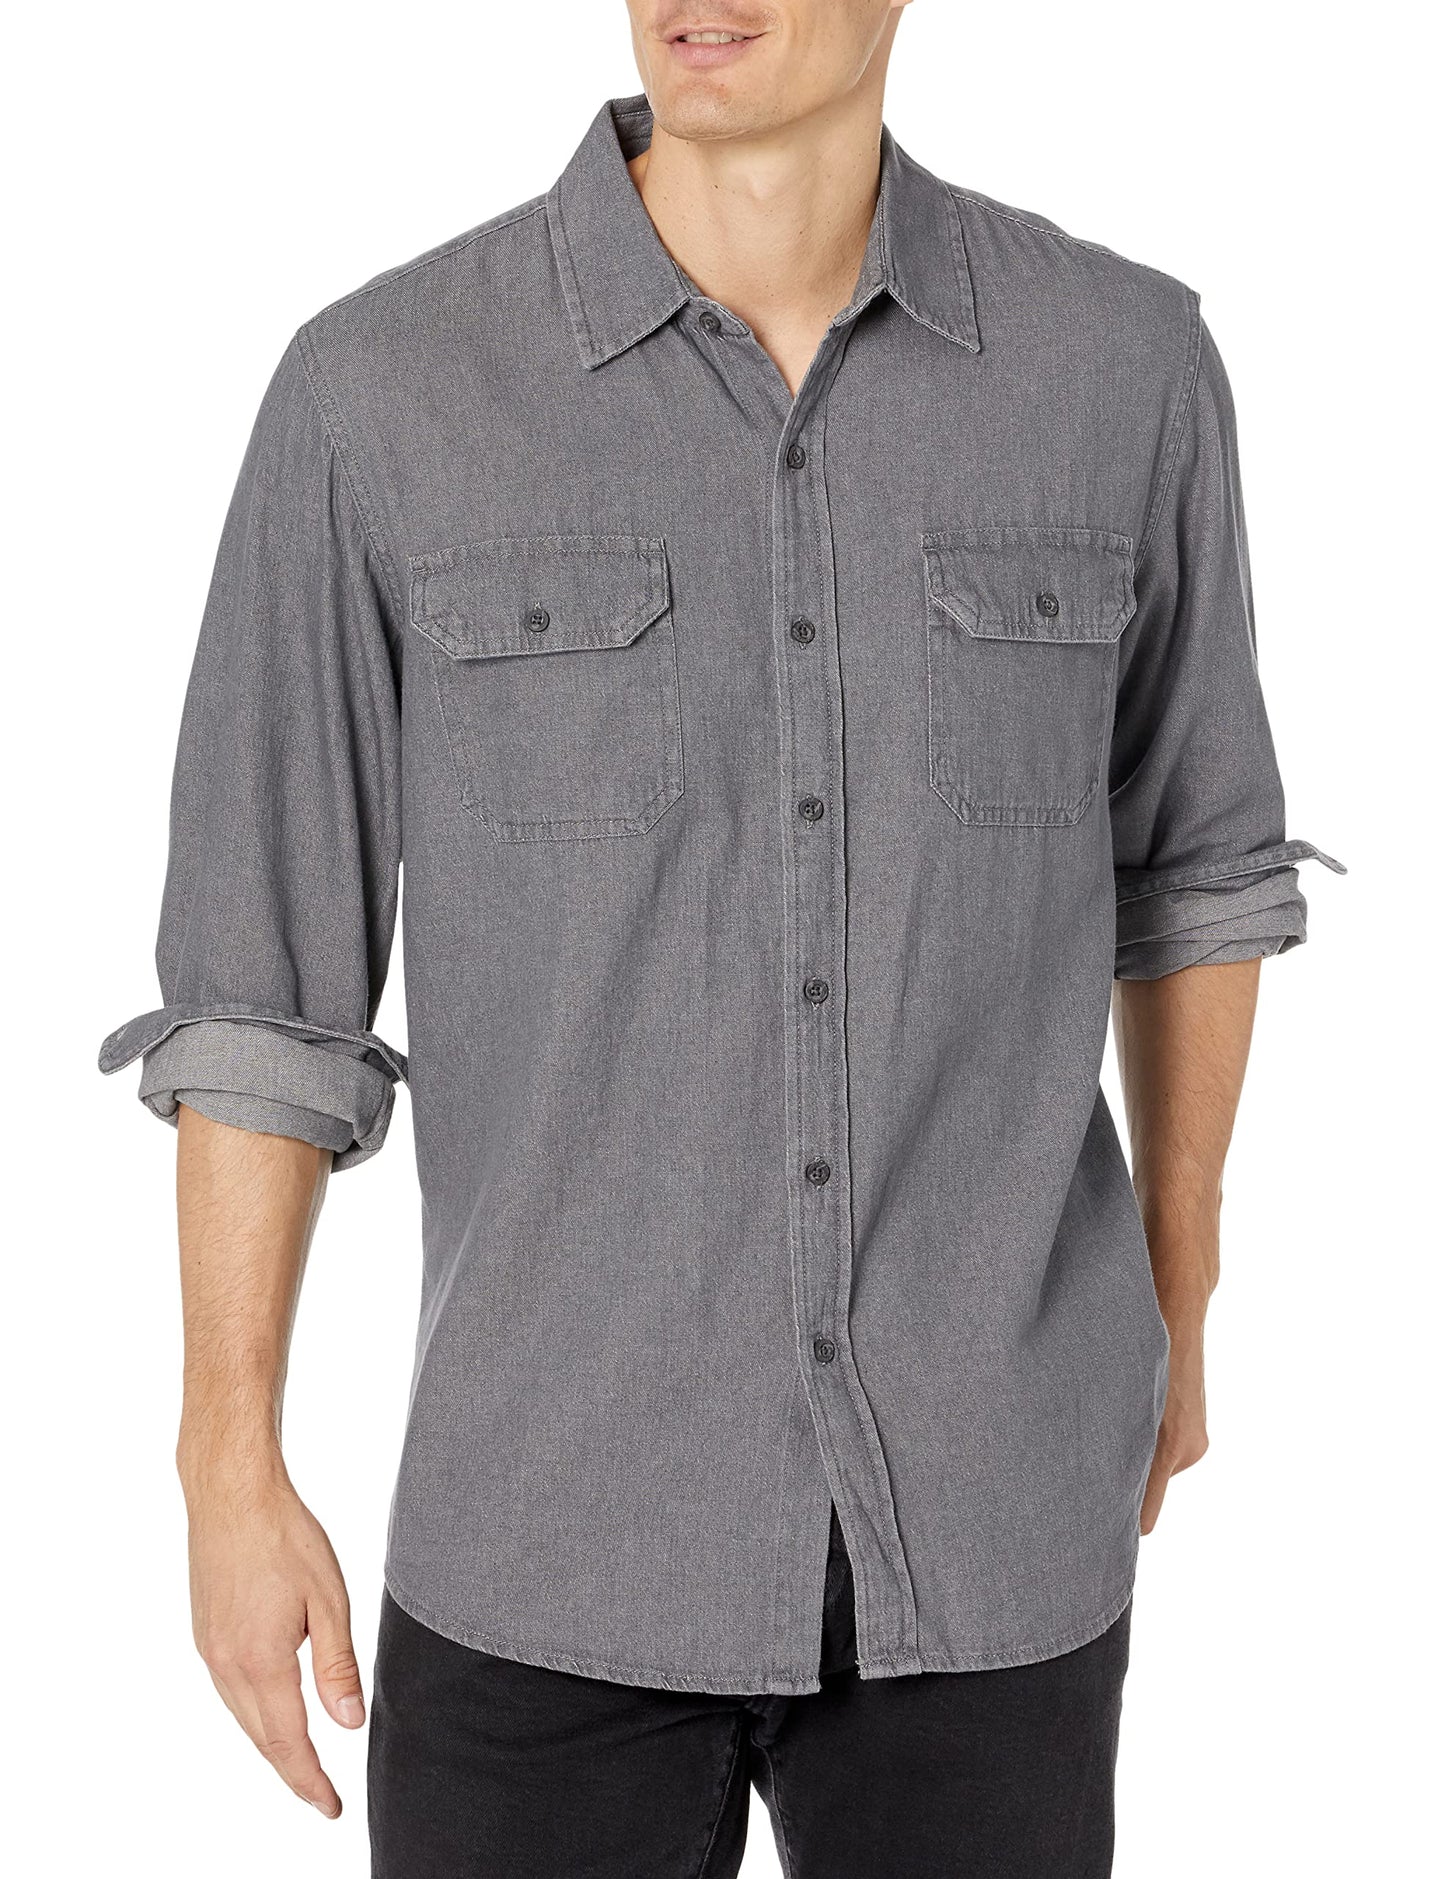 Wrangler Authentics Men's Long Sleeve Classic Woven Shirt, Grey, Small